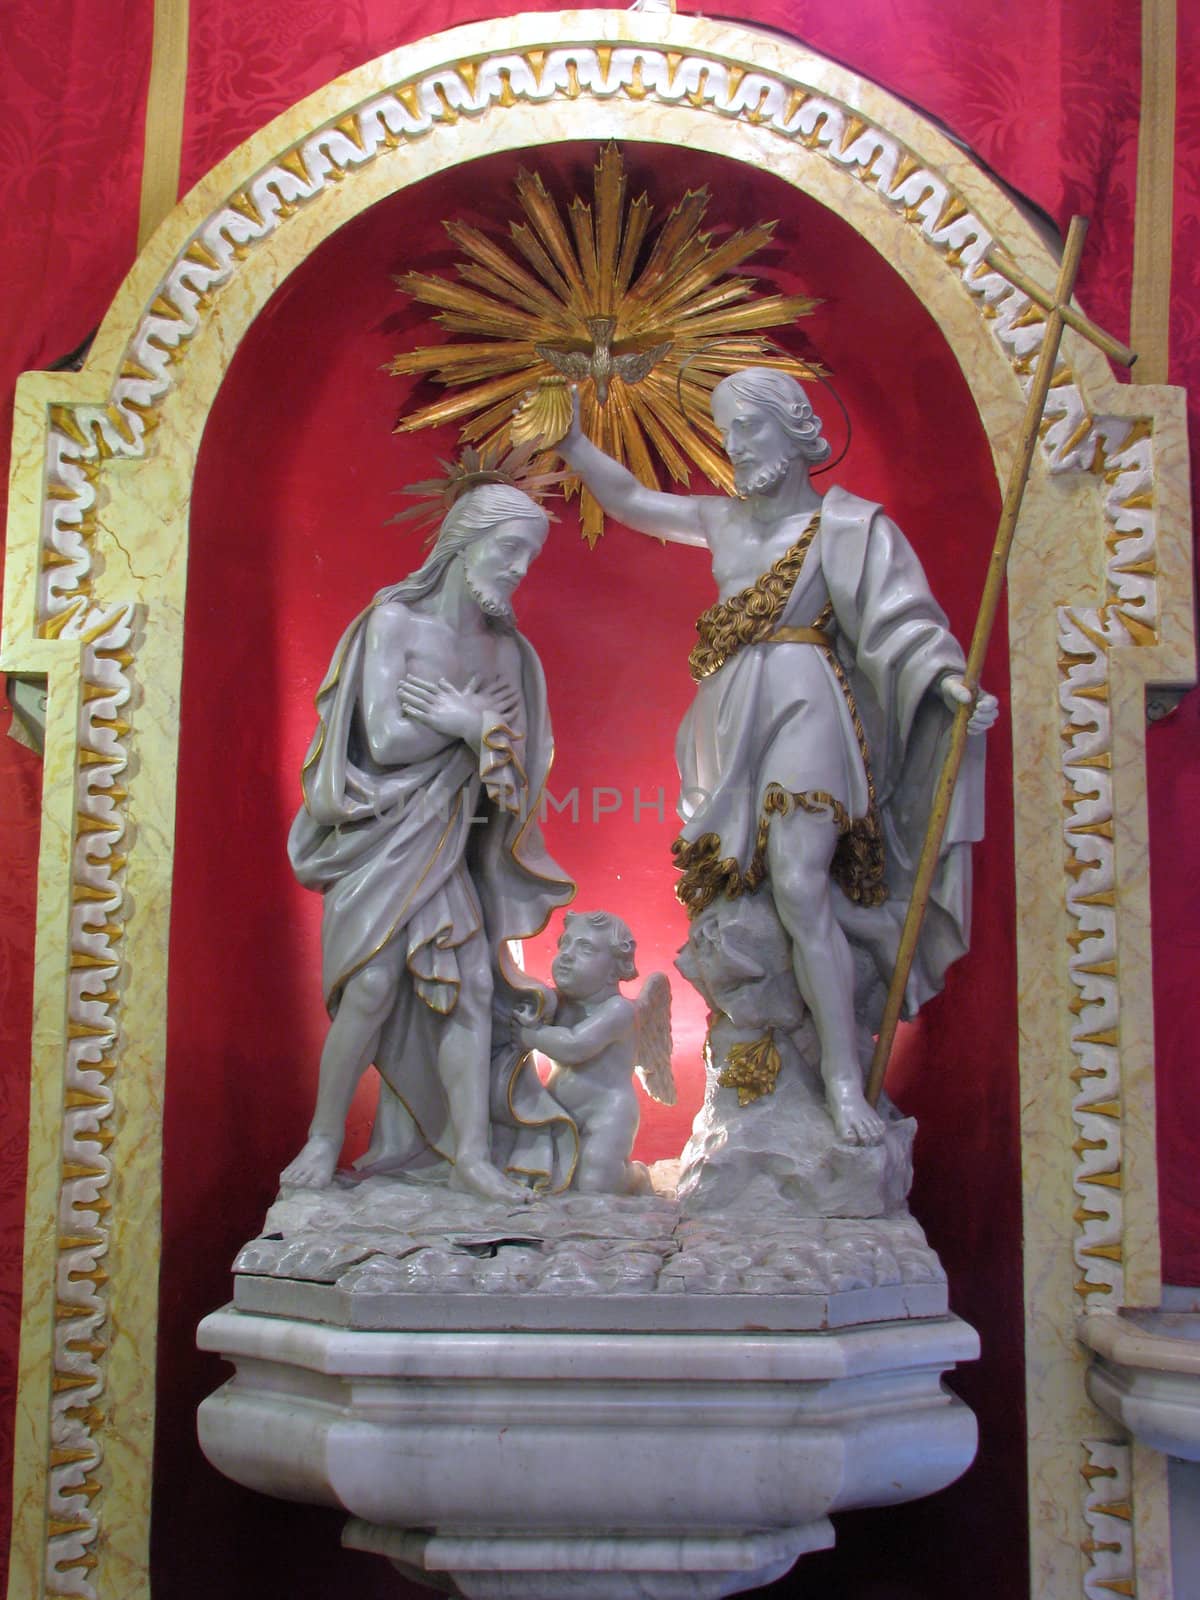 The statue of The Baptism of Jesus in Rabat, Malta.